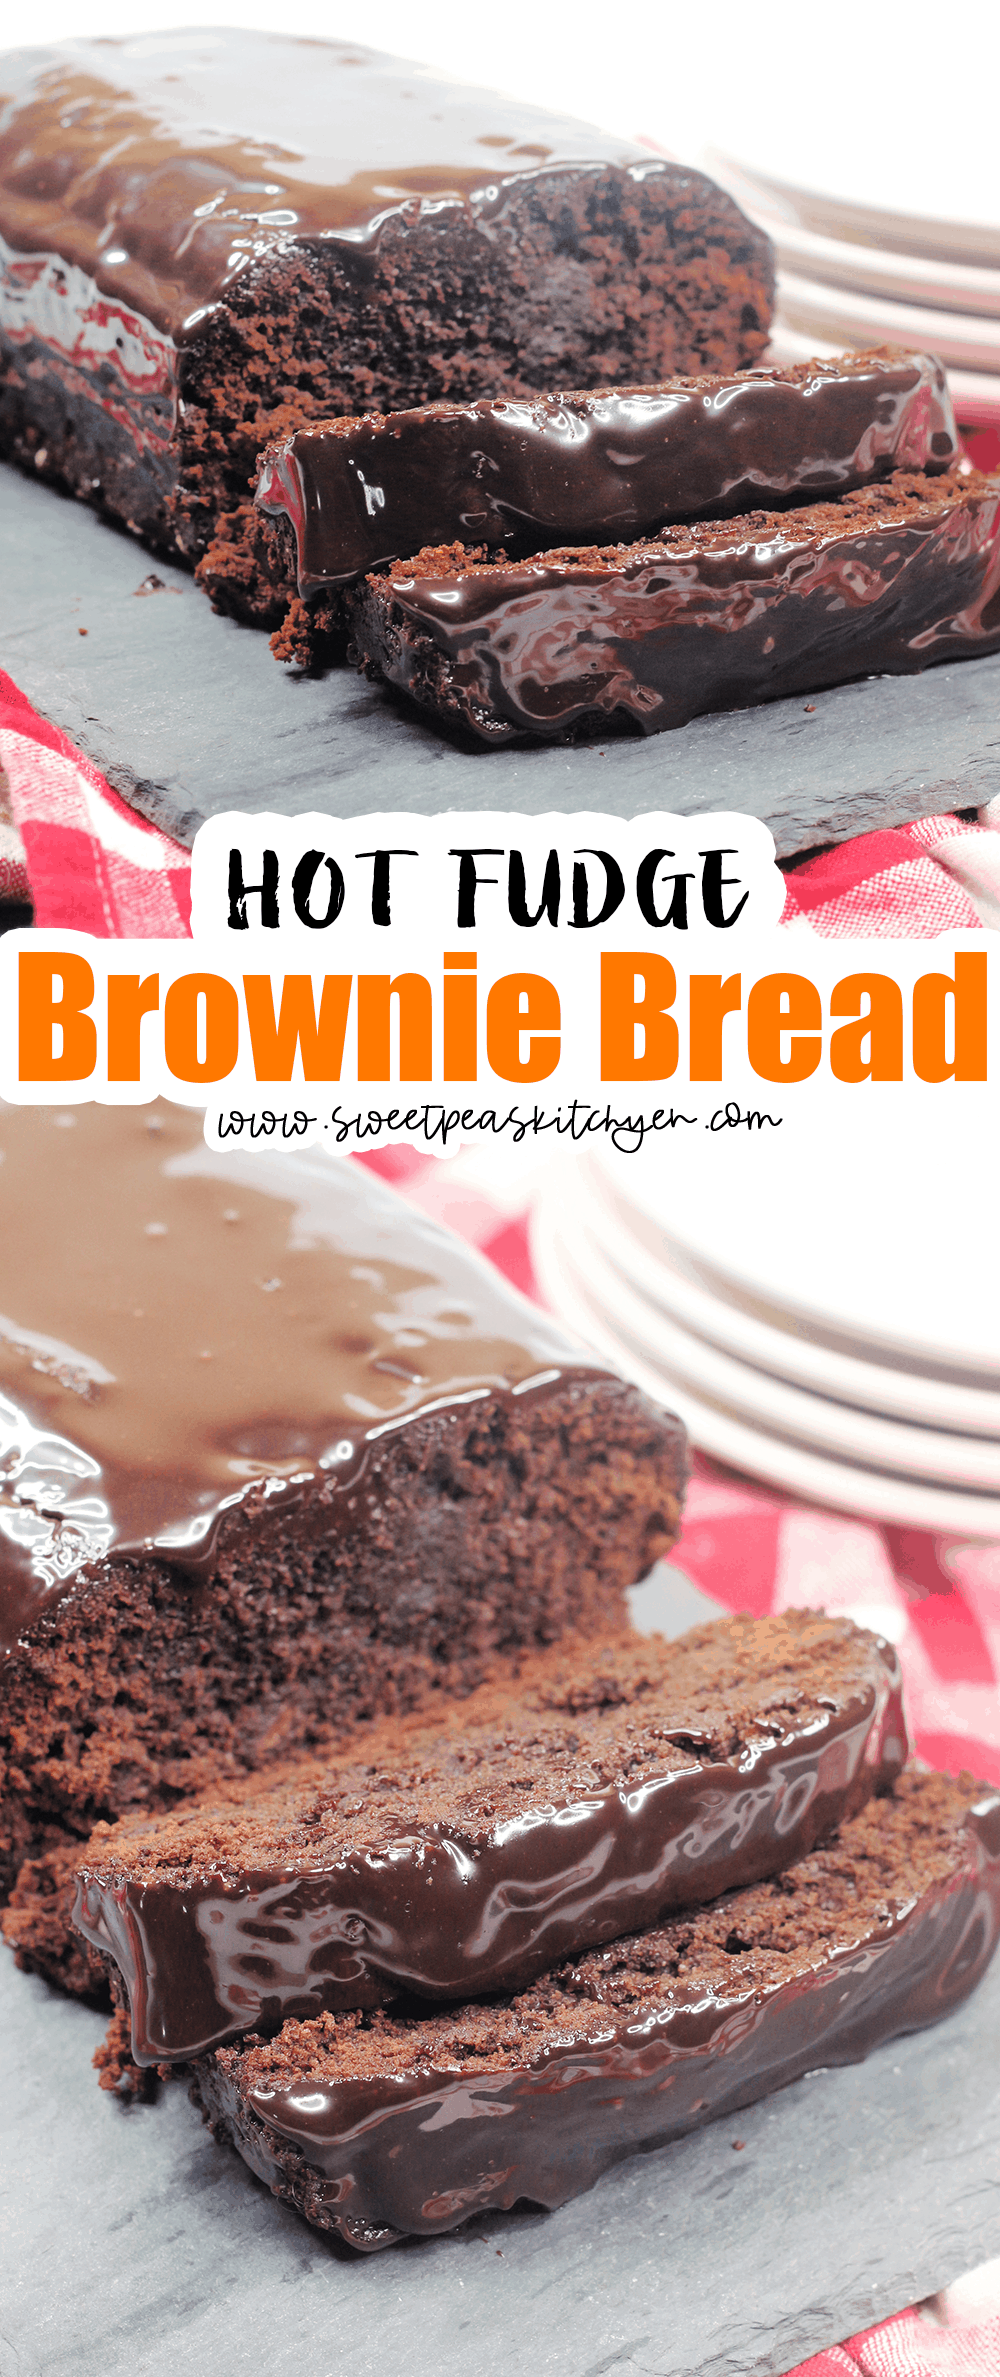 Hot Fudge Brownie Bread on pinterest